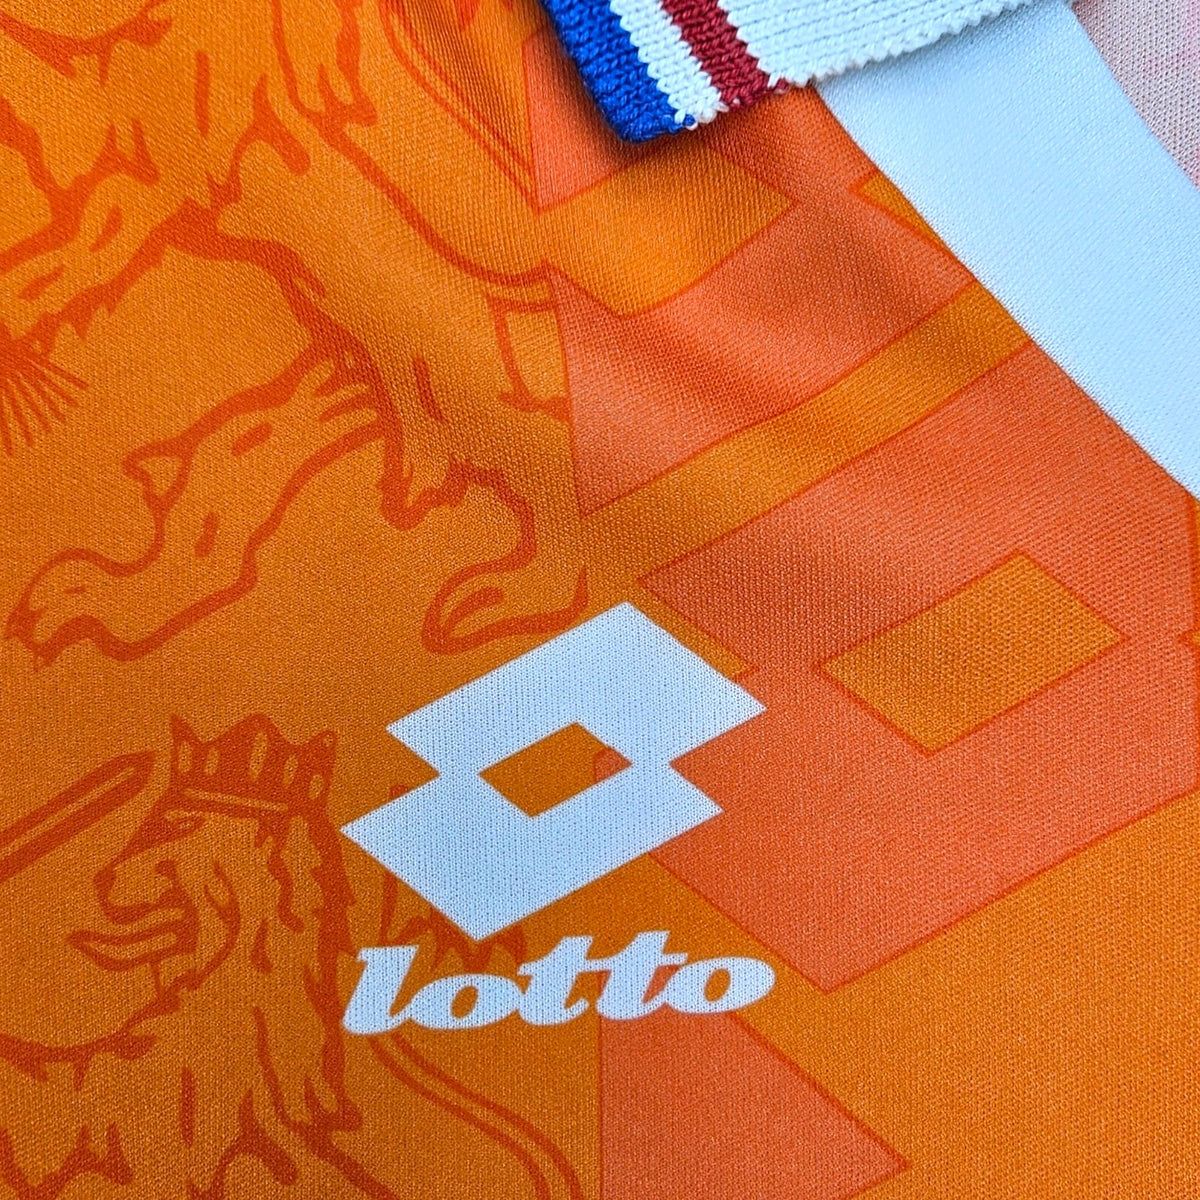 1994/95 Holland Home Football Shirt (M) Lotto #10 Bergkamp - Football Finery - FF203834